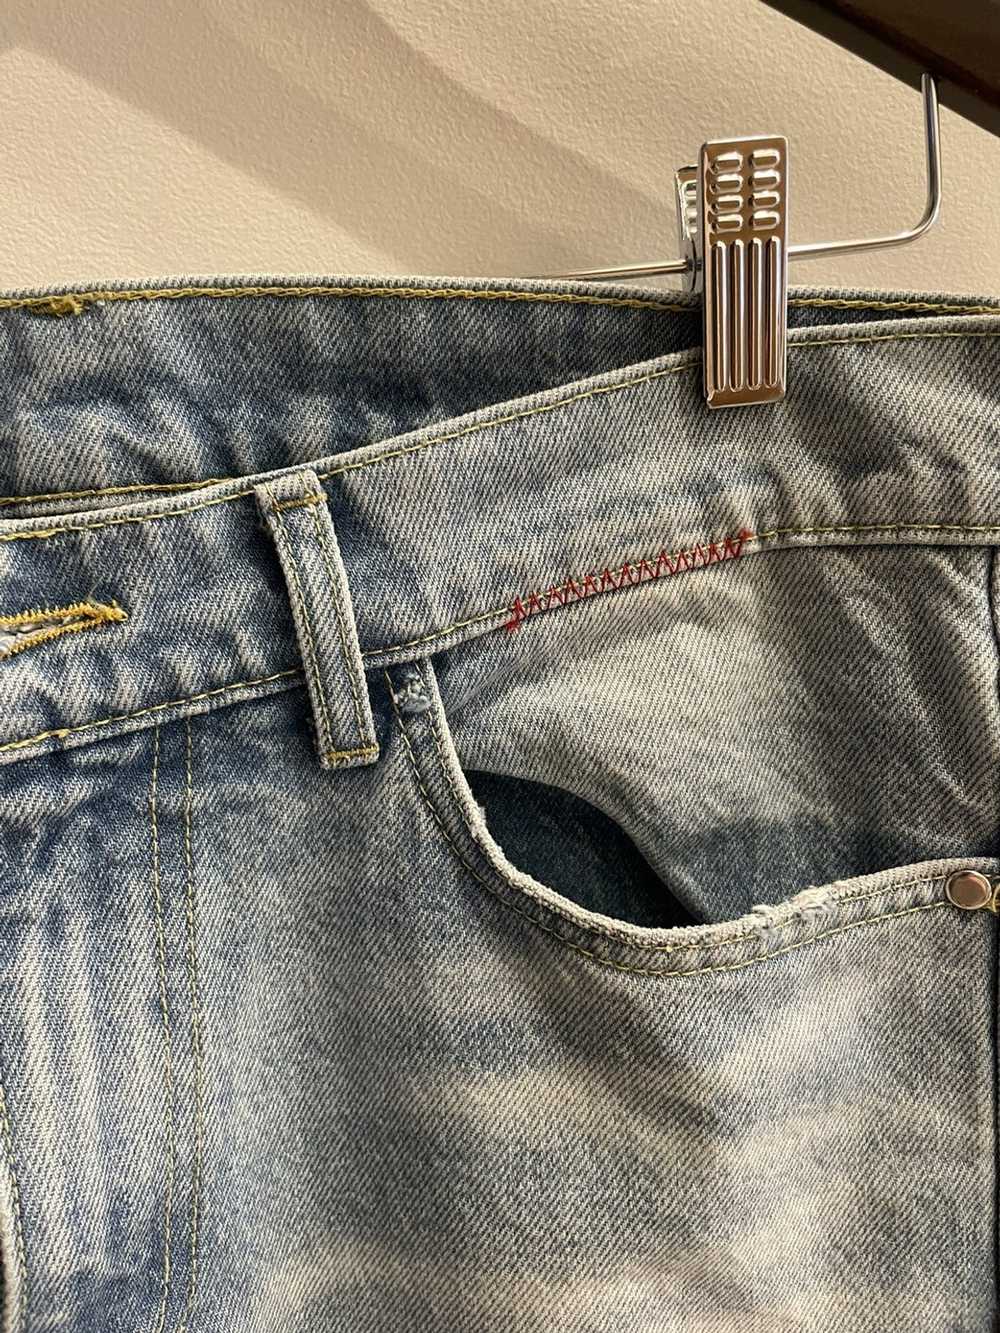 Vintage Vintage Reconstructed Flare Jeans - image 3